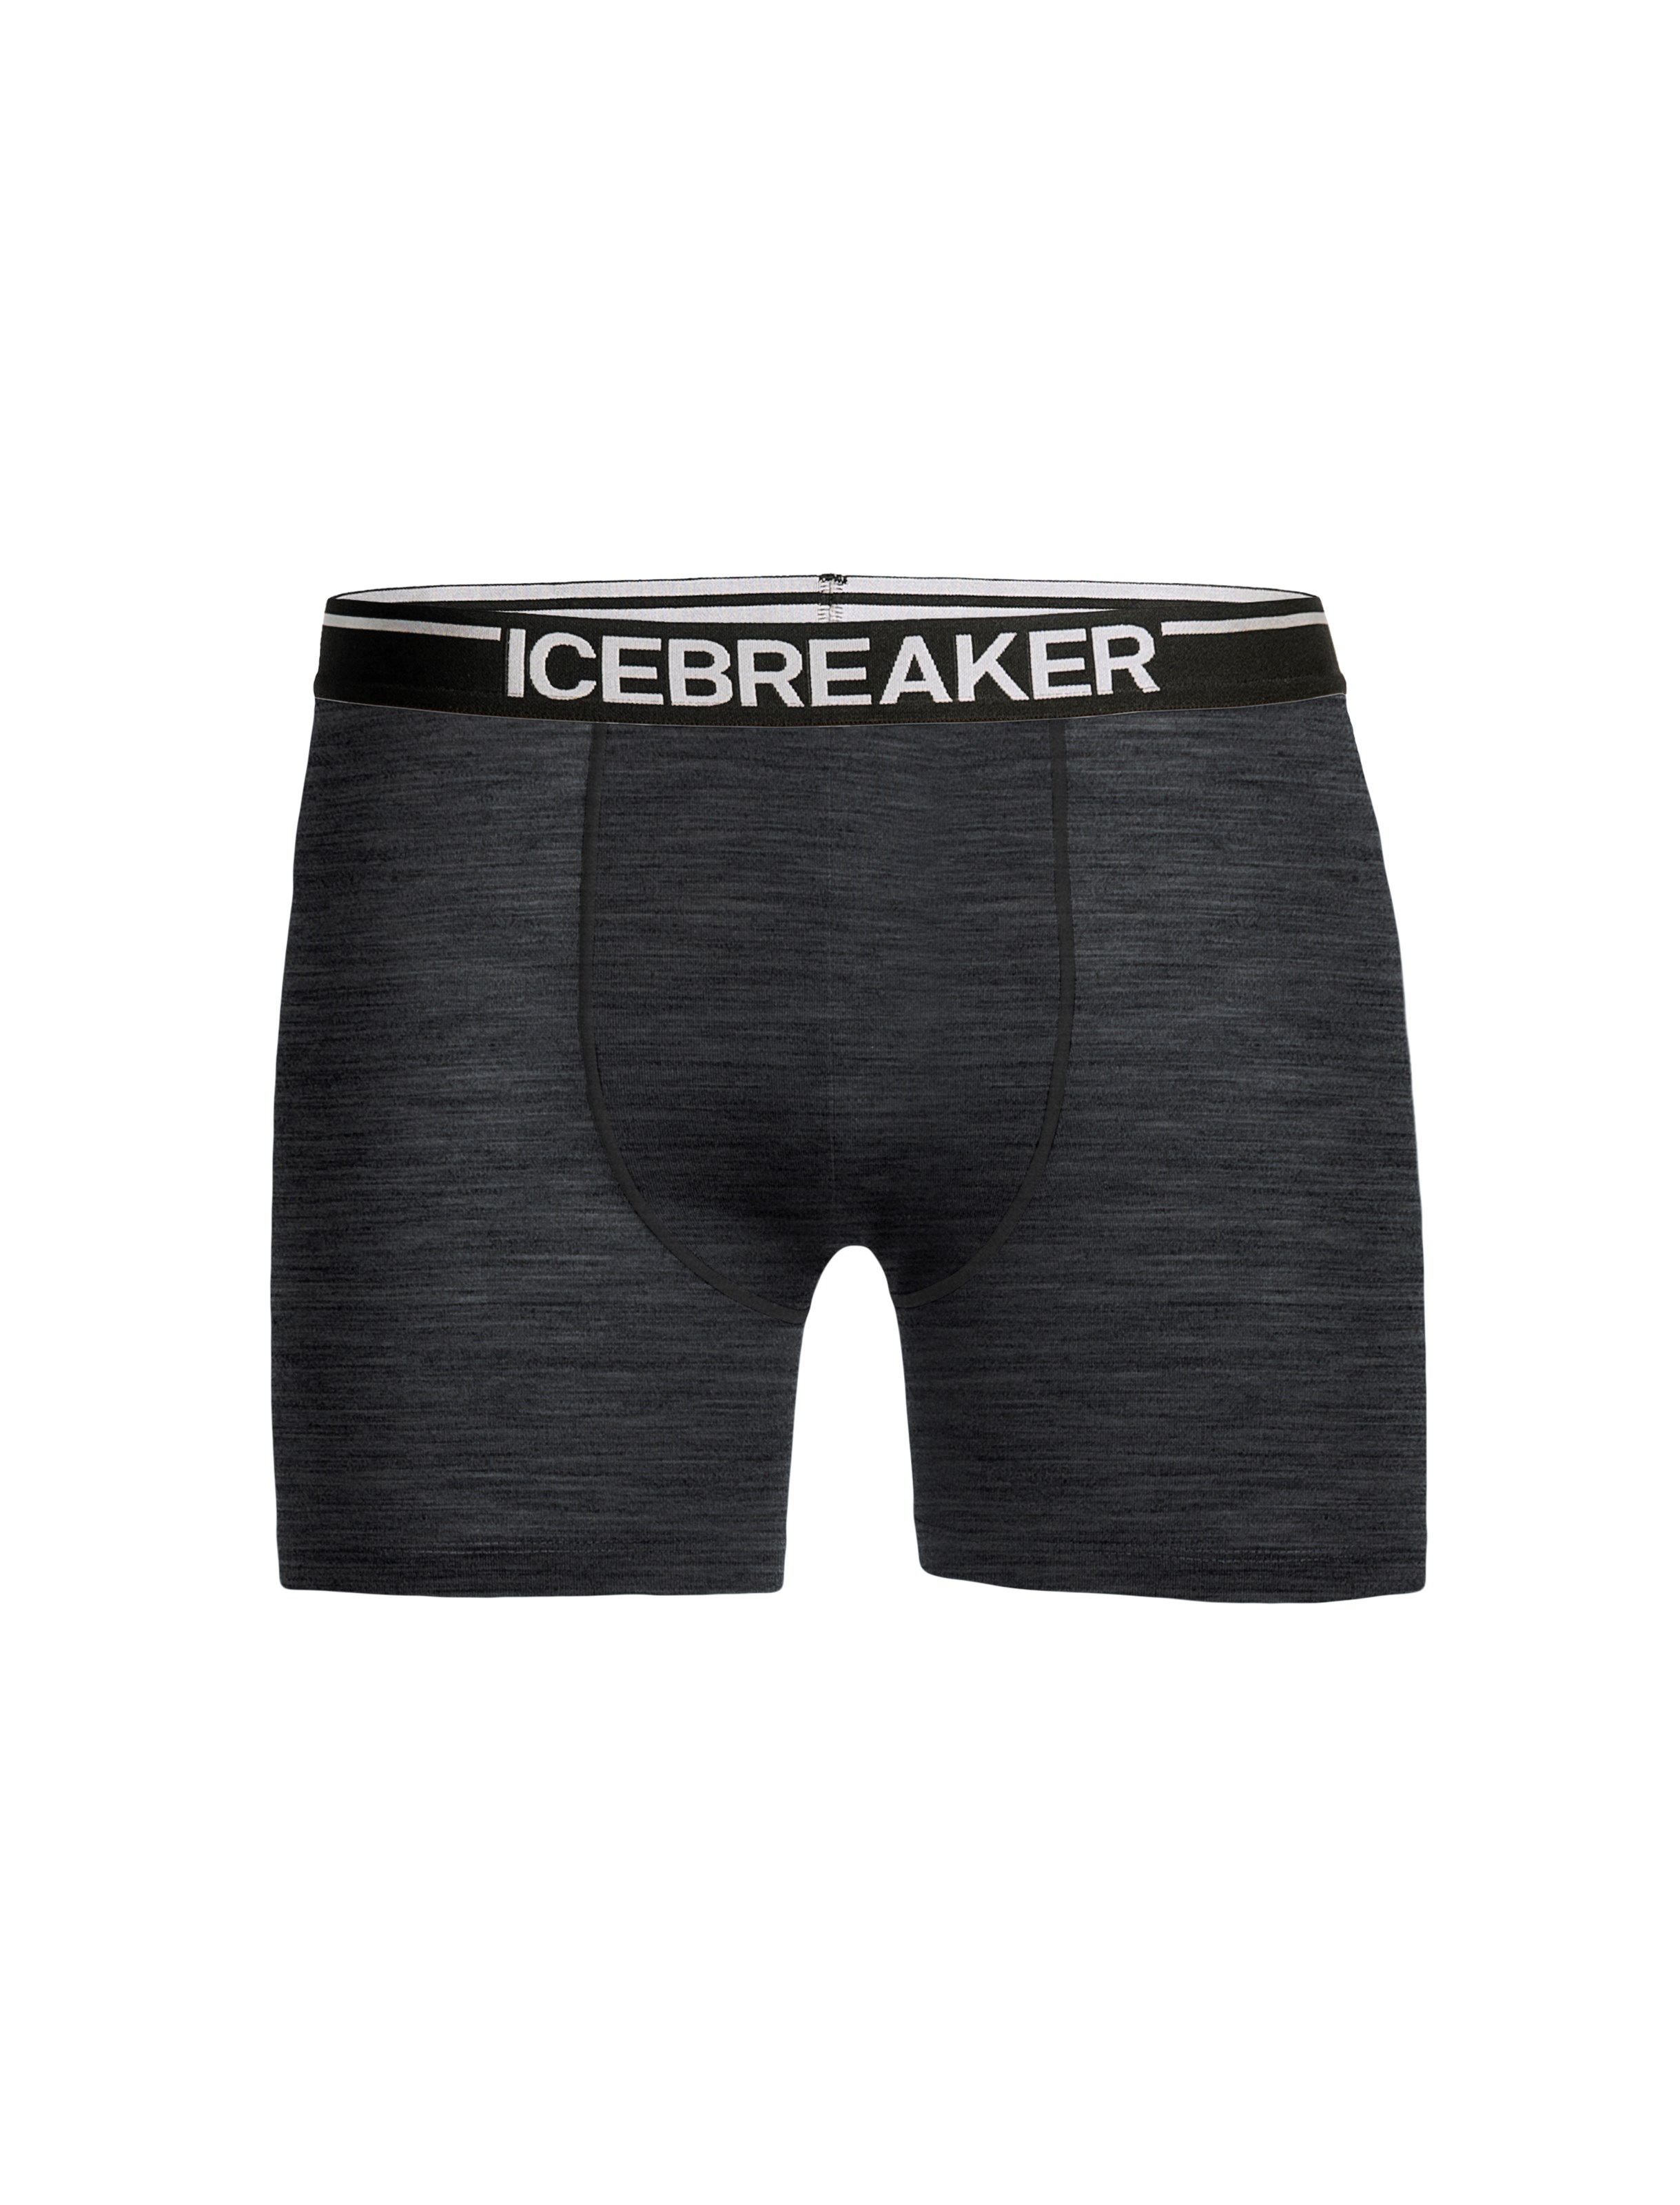 Icebreaker Anatomica Boxers, boxershorts herre Jet HTHR utg. 103029008 S 2020